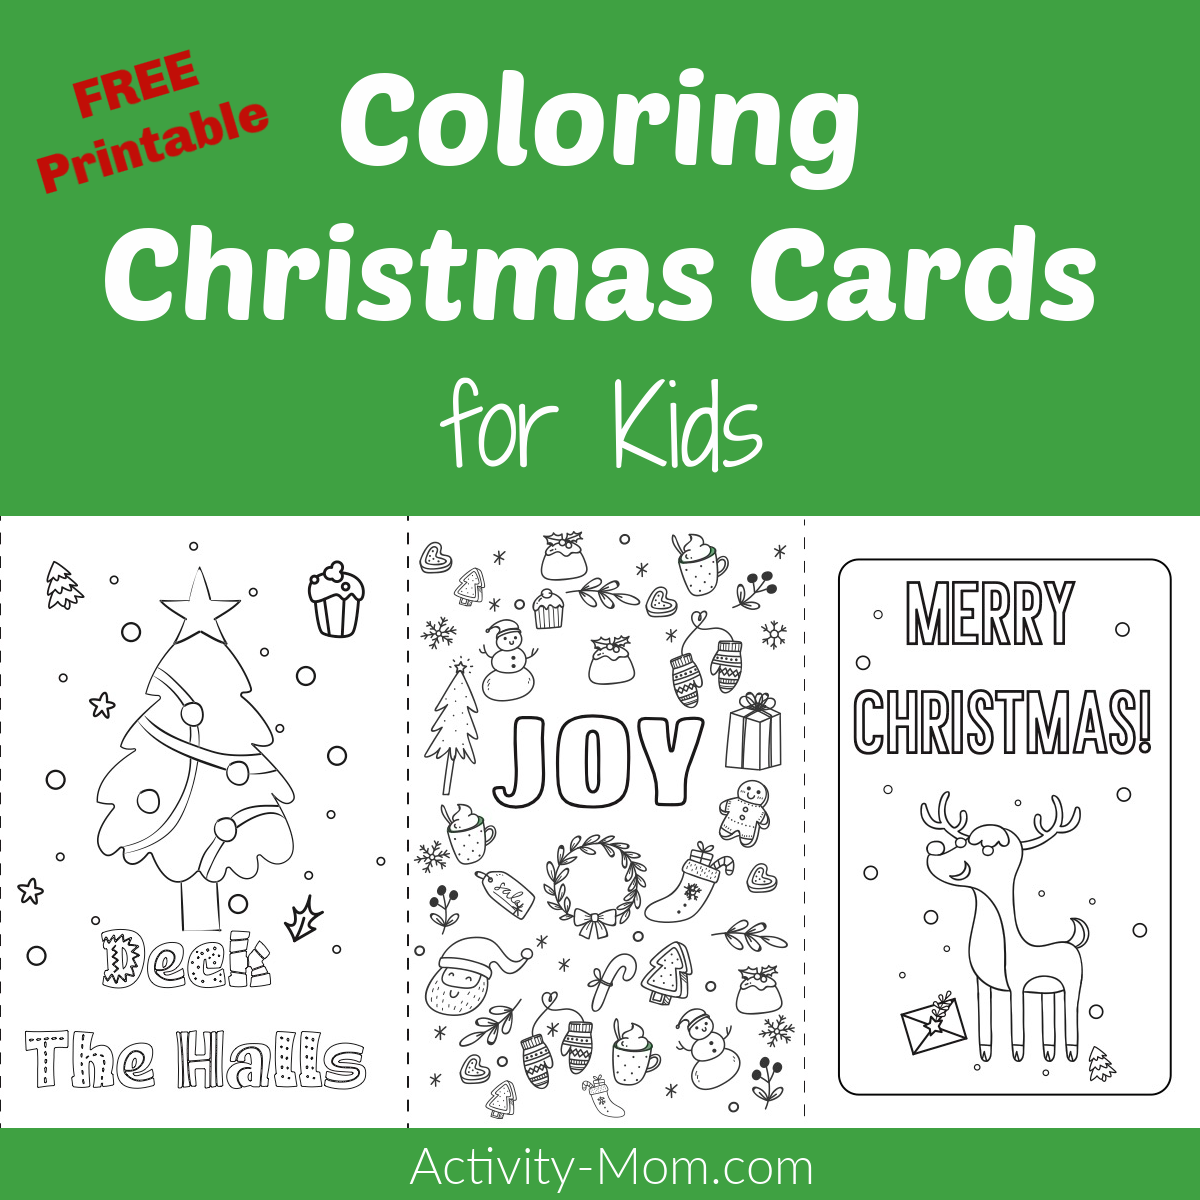 Printable coloring christmas cards for kids